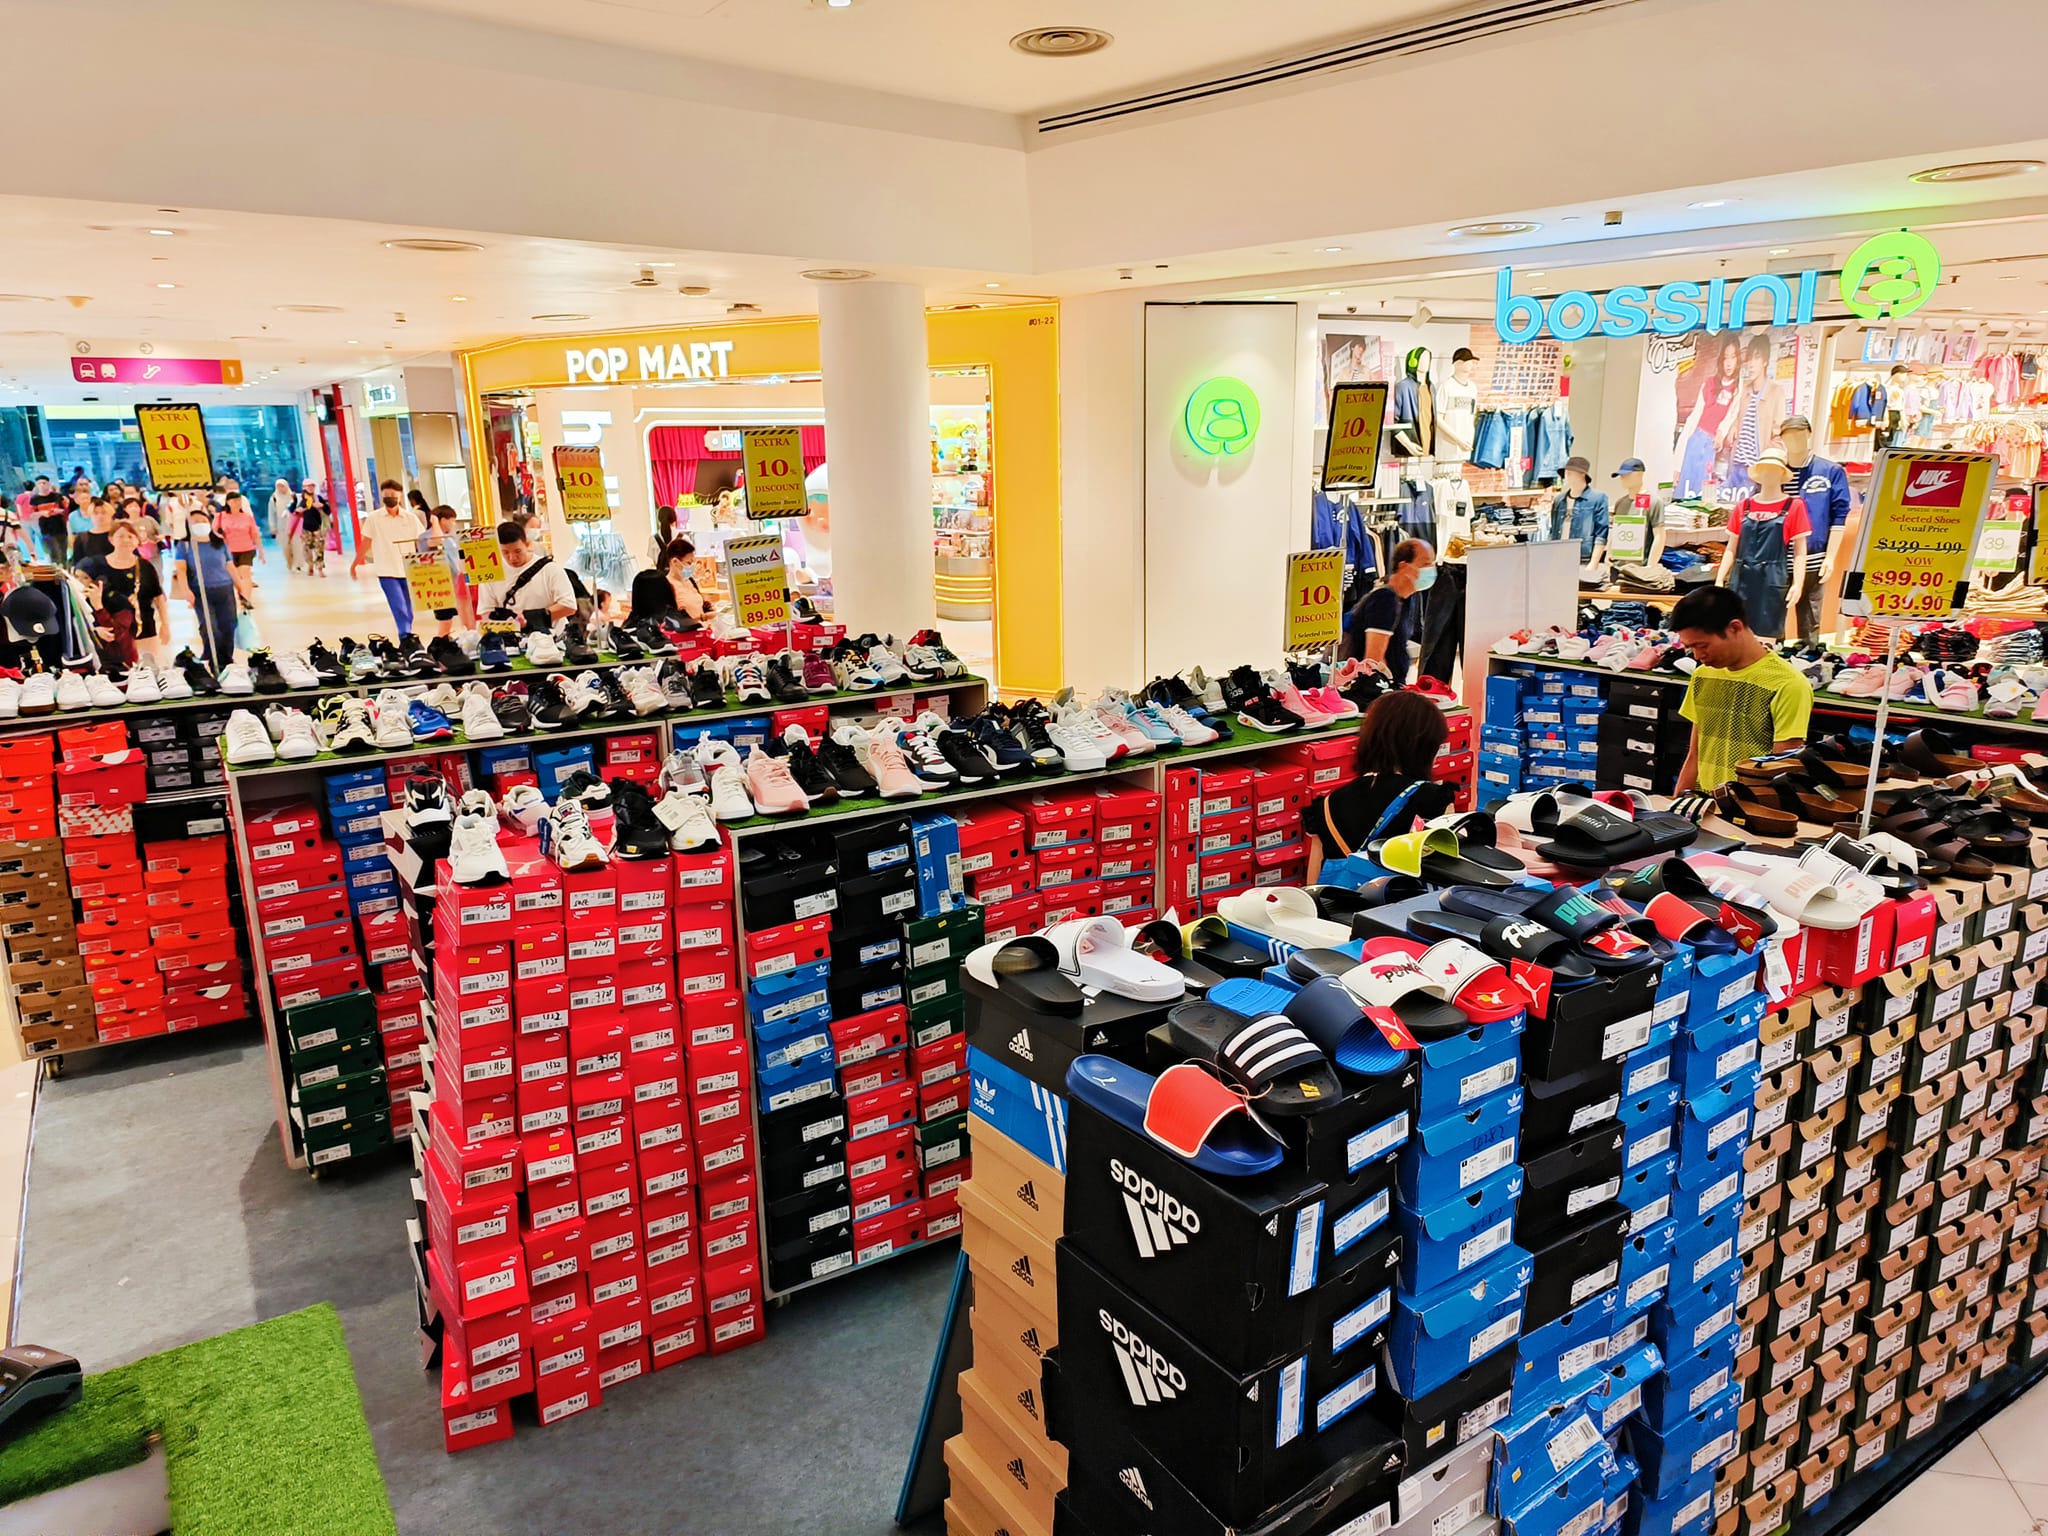 Lobang: Lot One's Atrium Sale Has Buy 1 Get 1 Free Sports Apparels From Adidas, Puma, Reebok & More Till 26 Mar 23 - 19